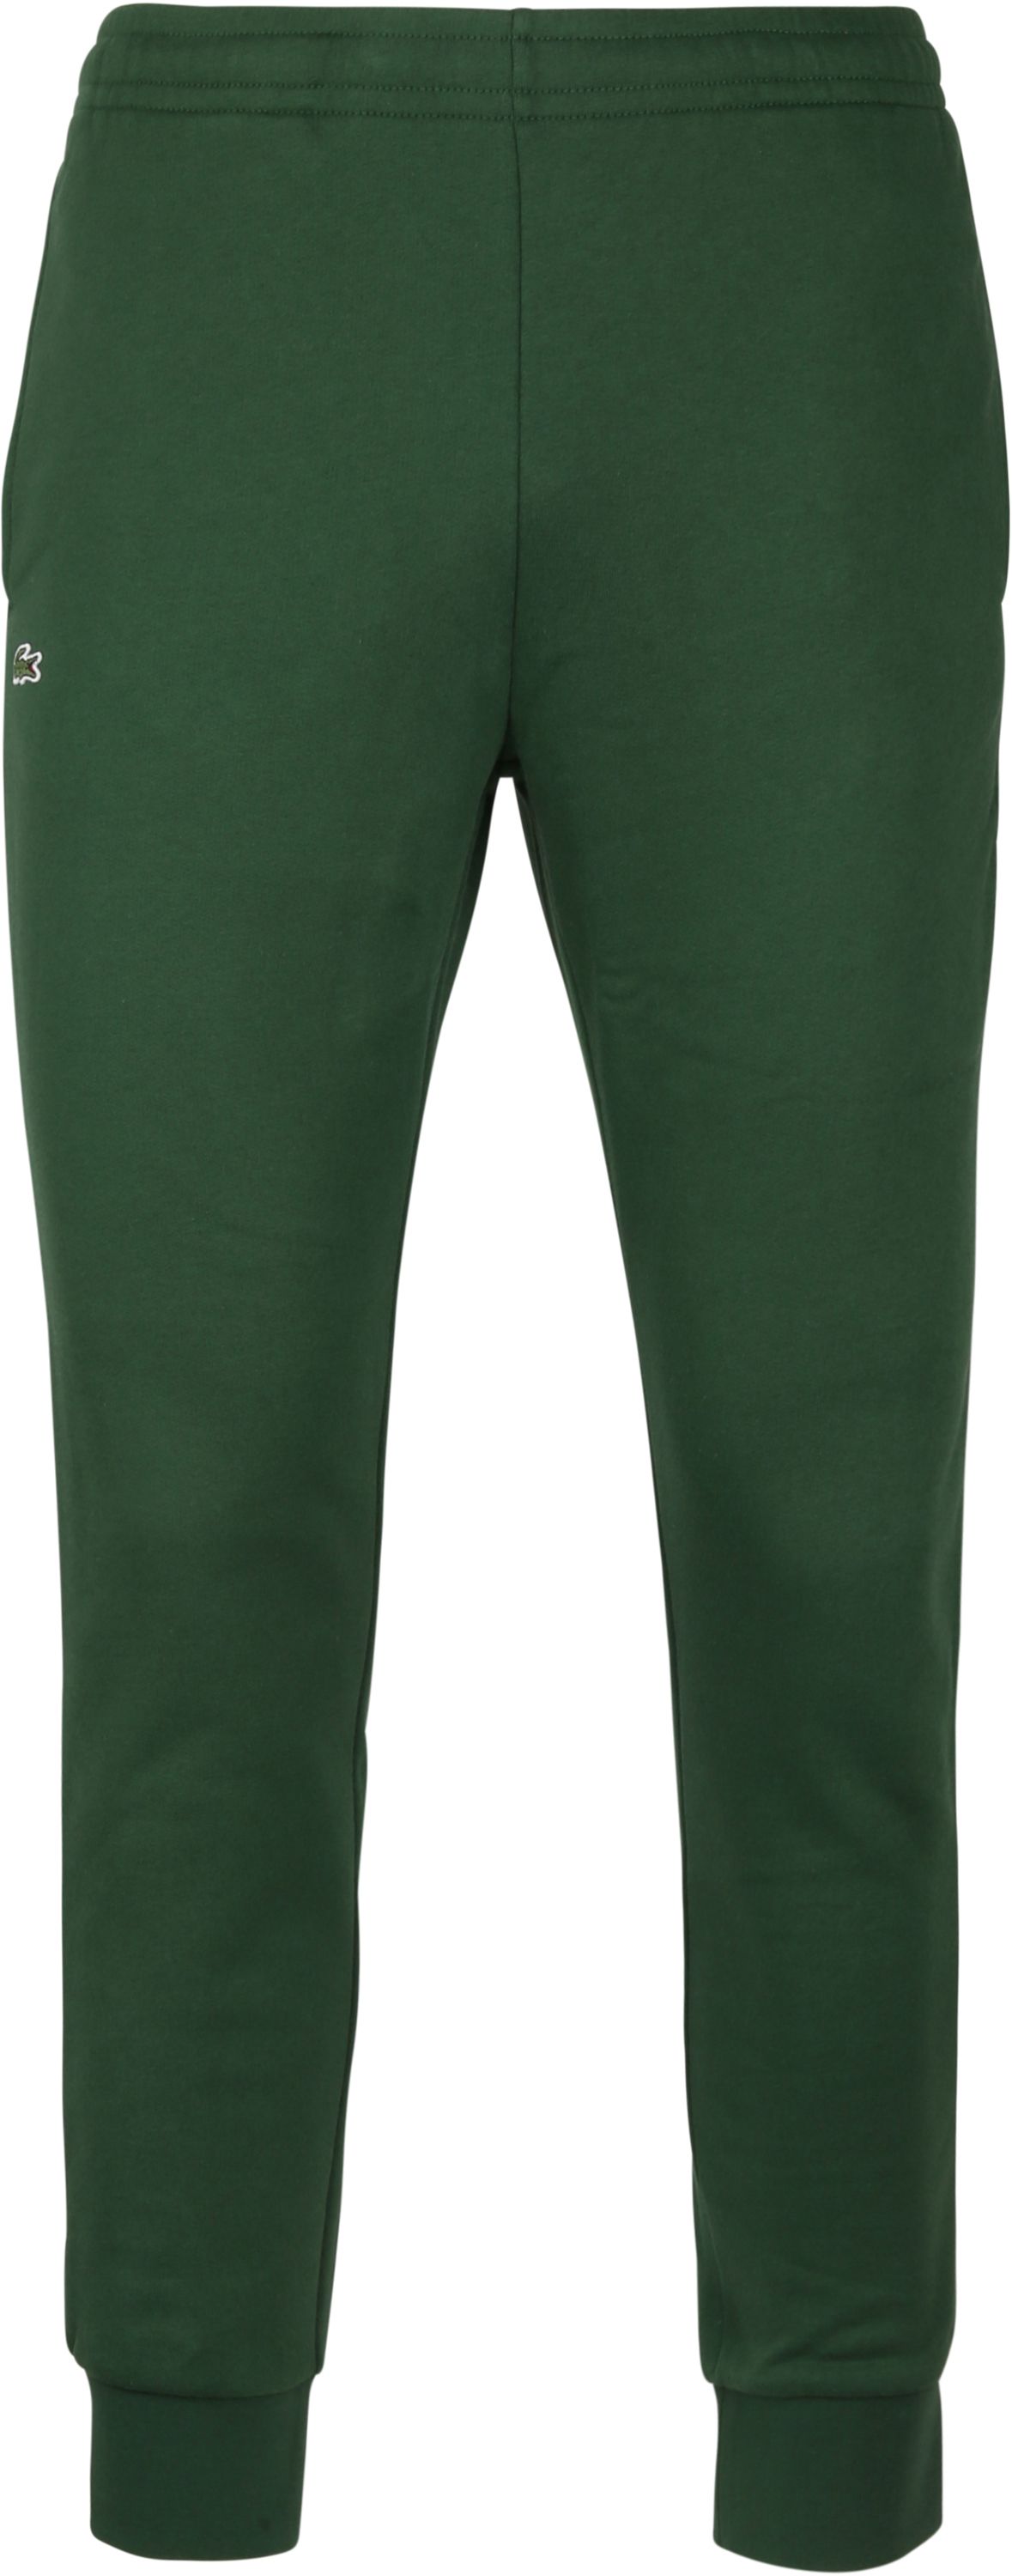 Lacoste Dark Sweatpants Green Dark Green size L